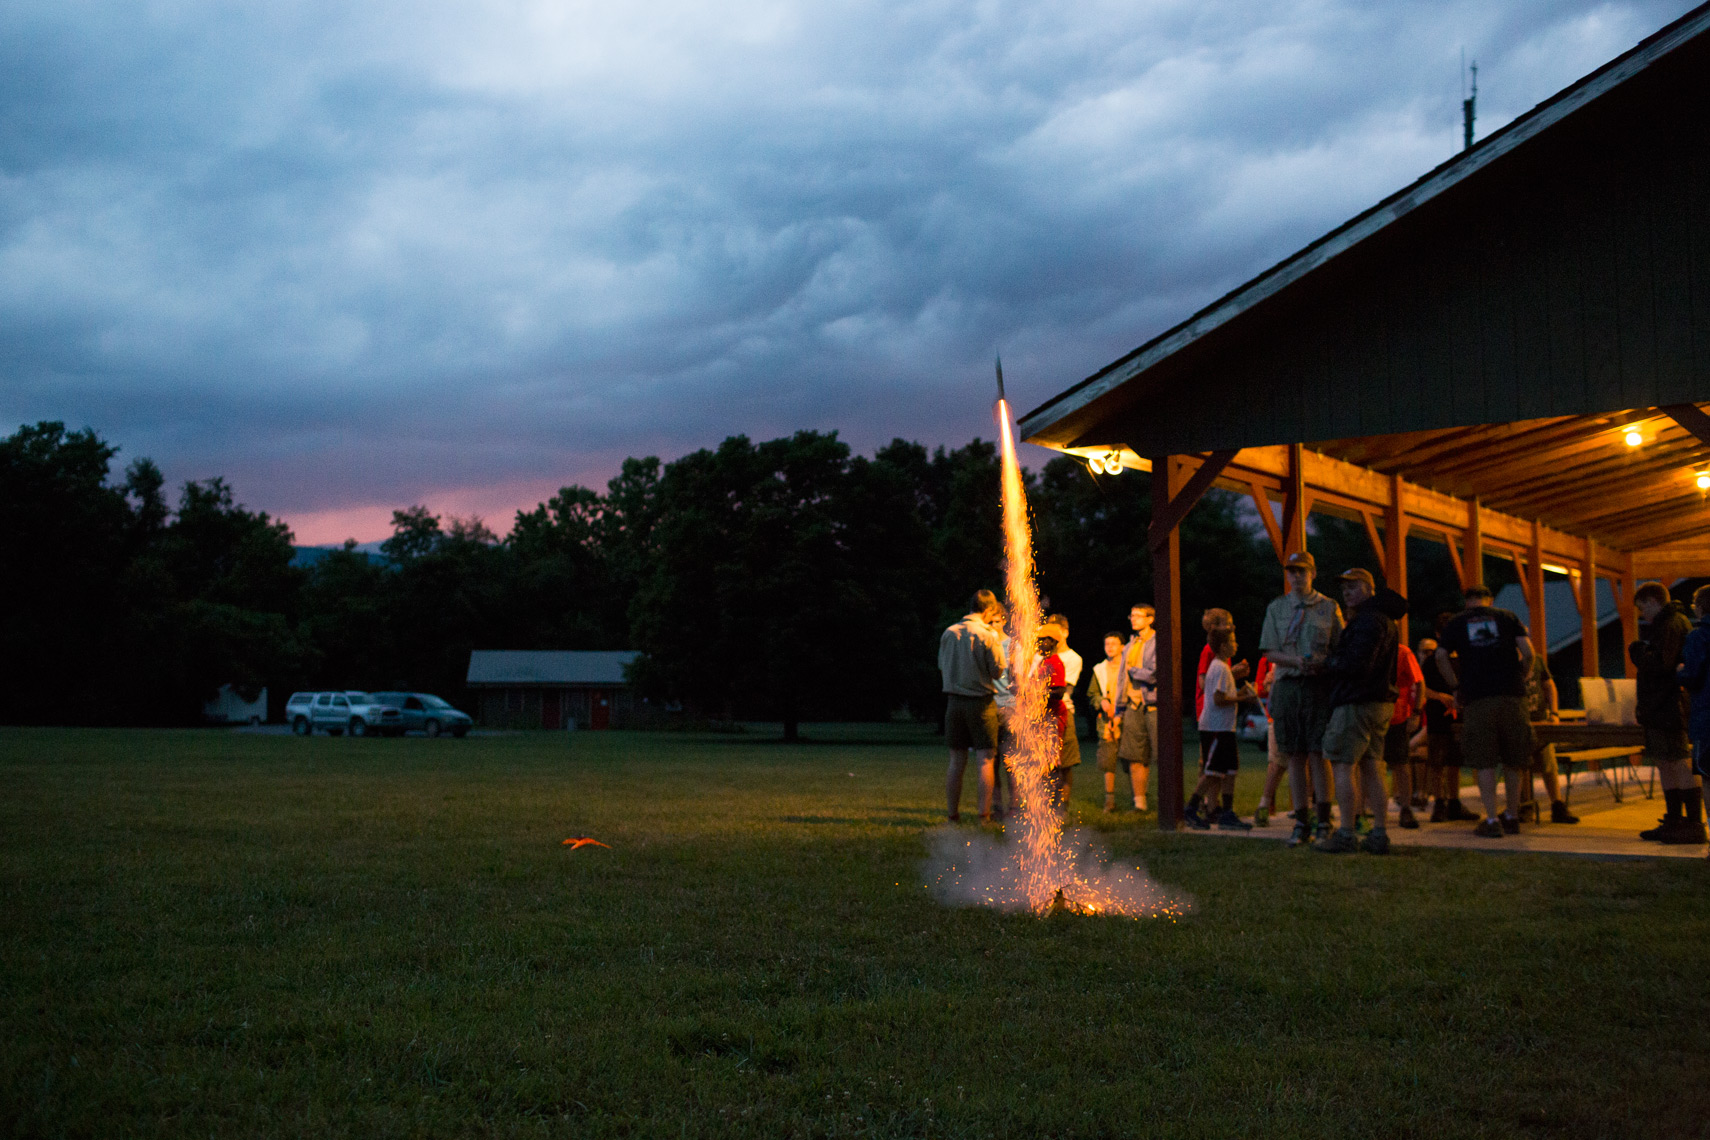 boy scouts launching model rocket under cloudy sky, washington dc photojournalism